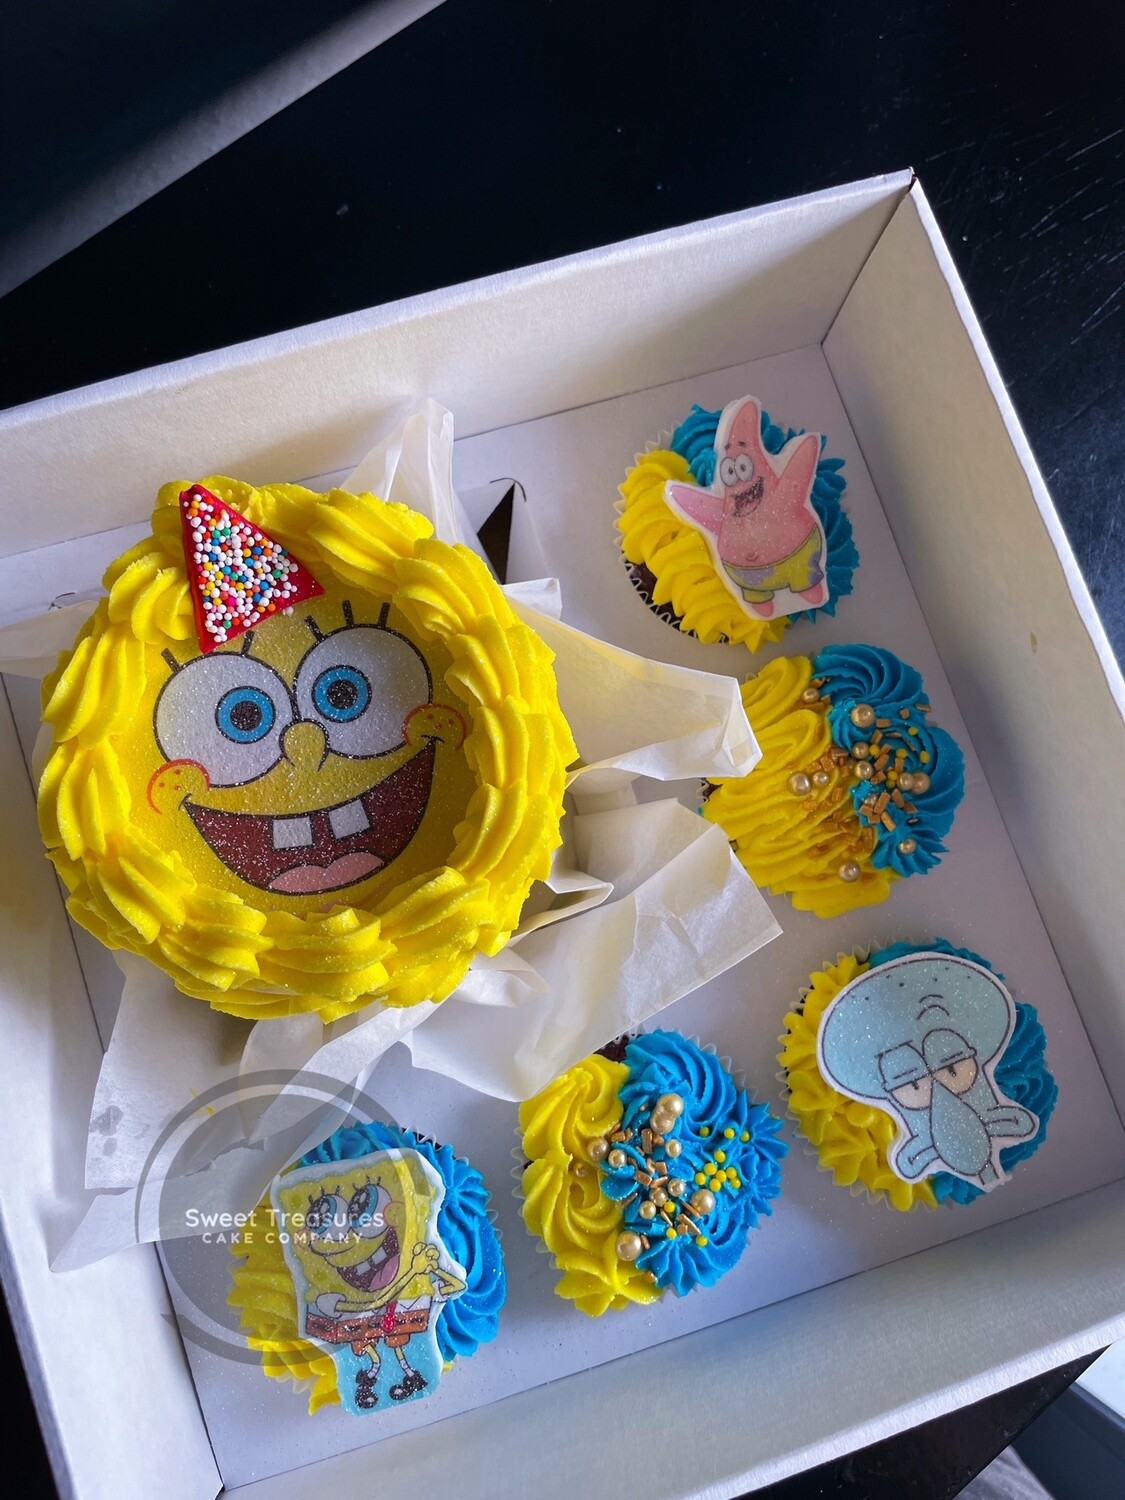 Sponge Bob Bento Celebration Cake Box, Bento Style: Bento Cake with 5 Cupcakes